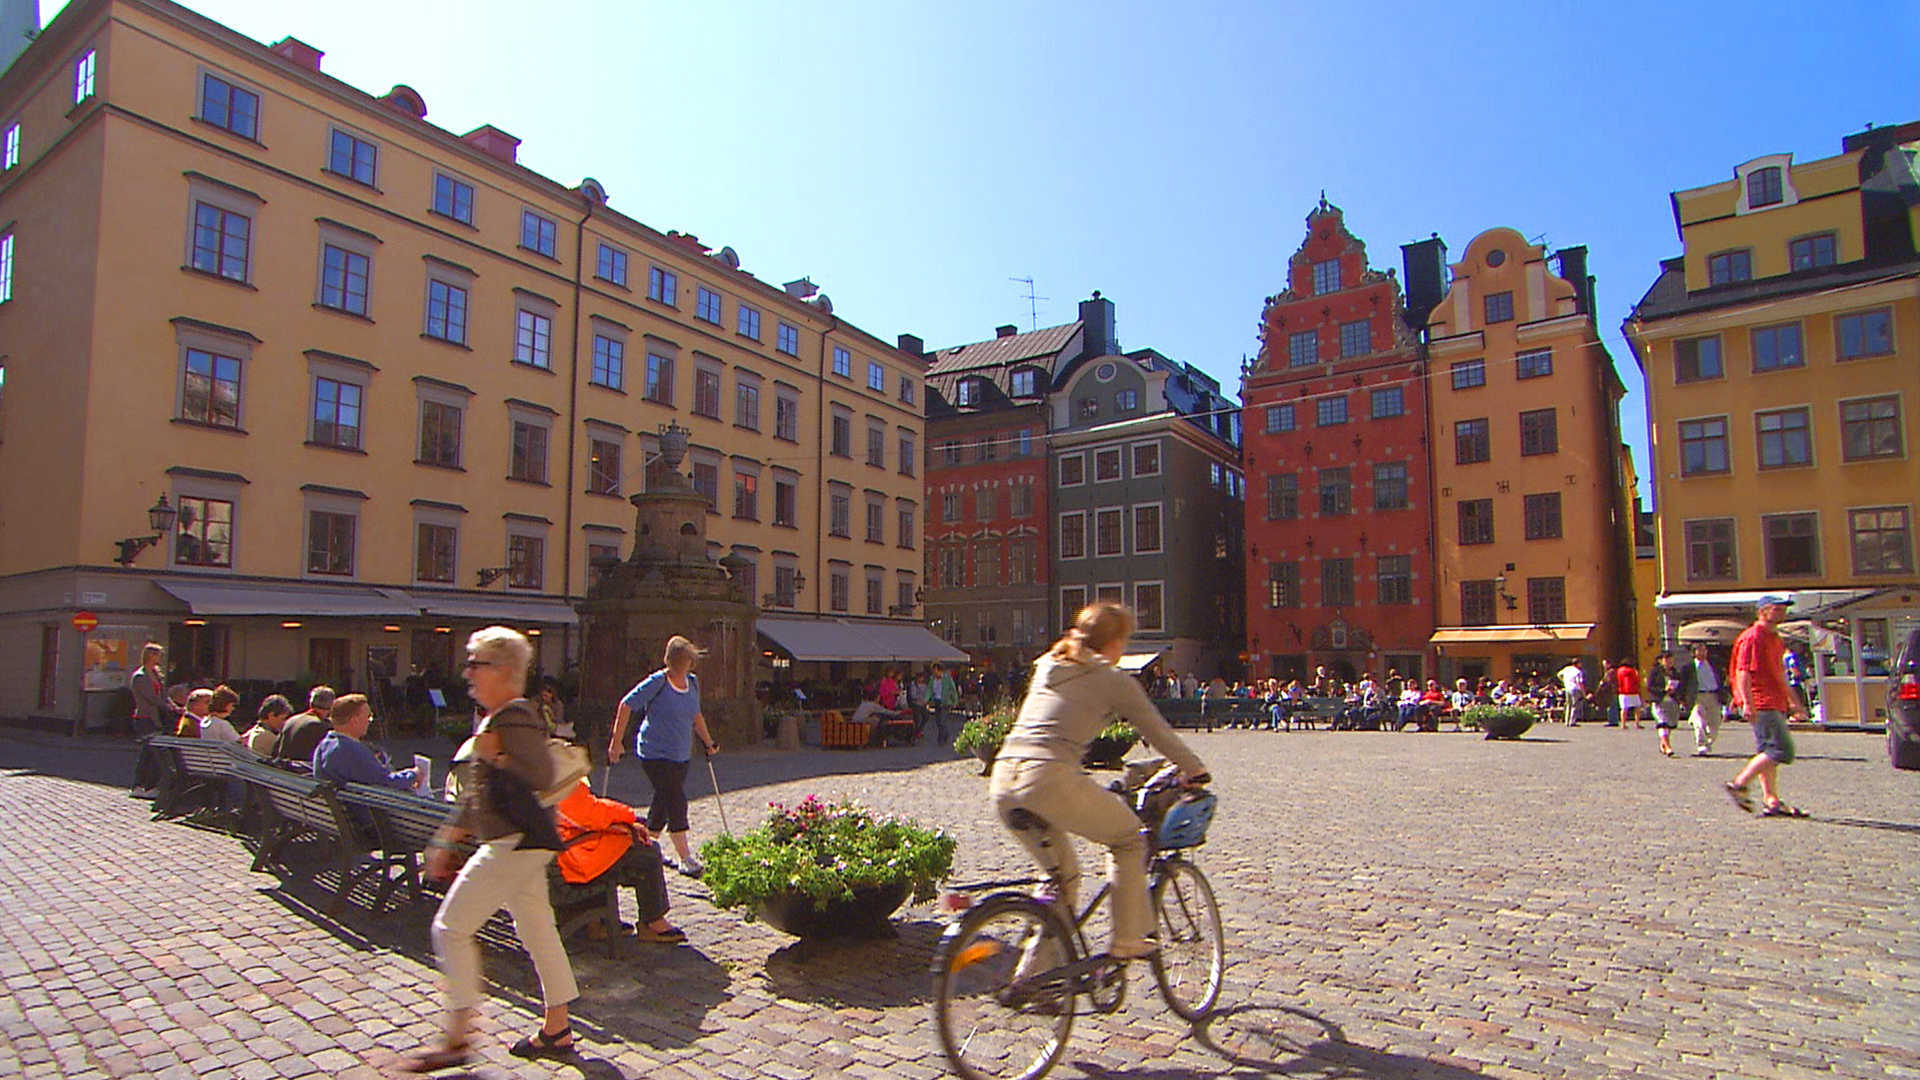 Stockholm's old town in Sweden